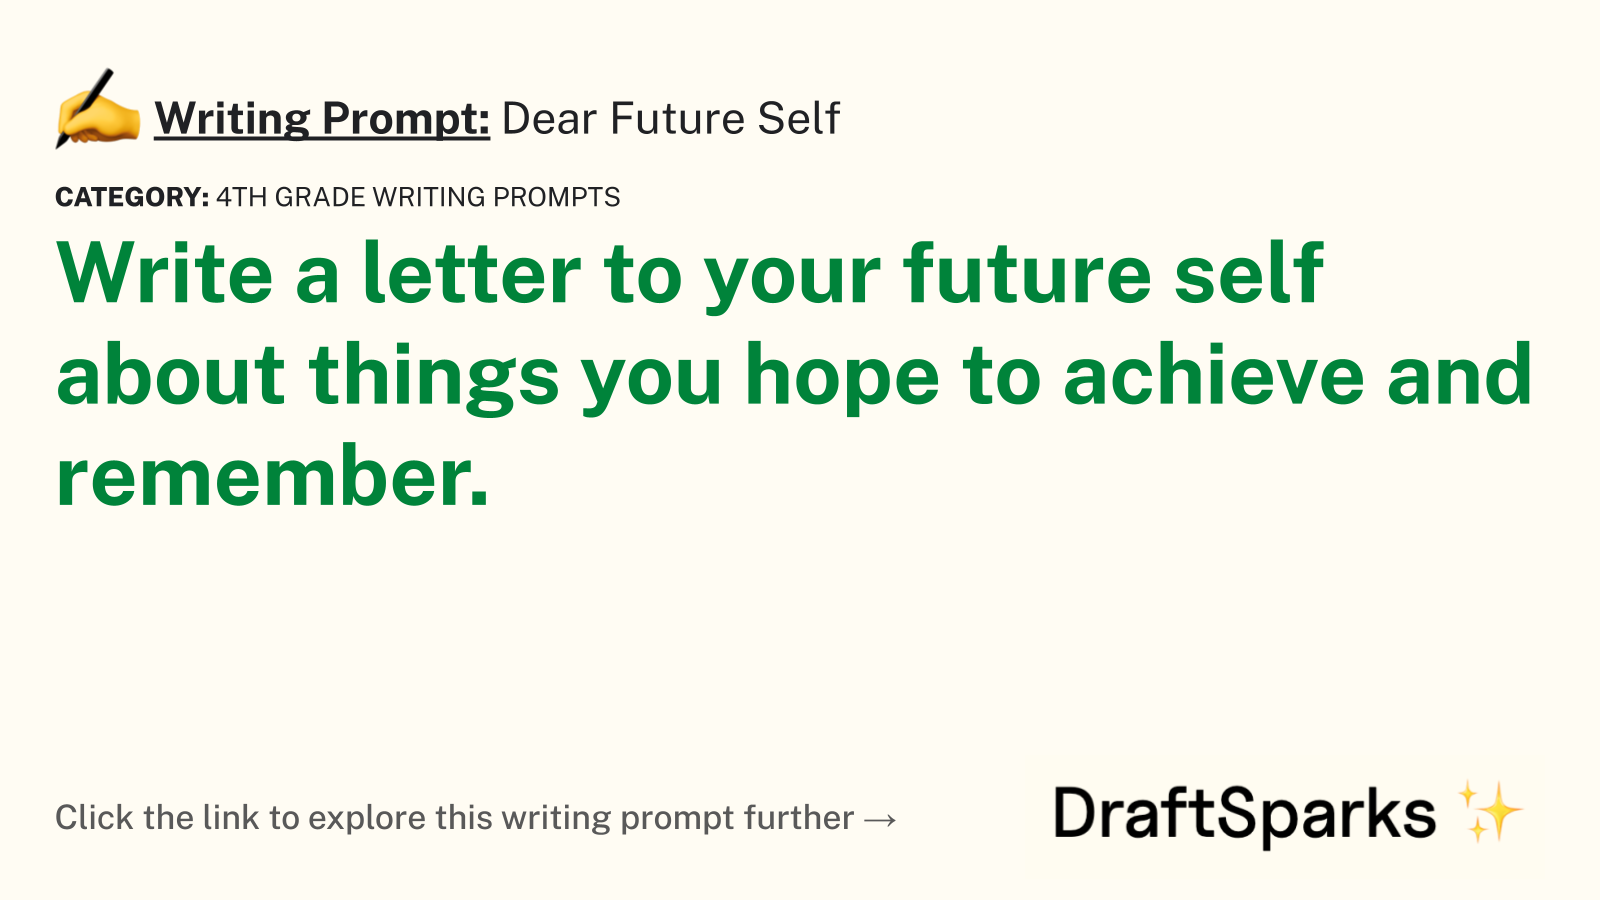 Dear Future Self